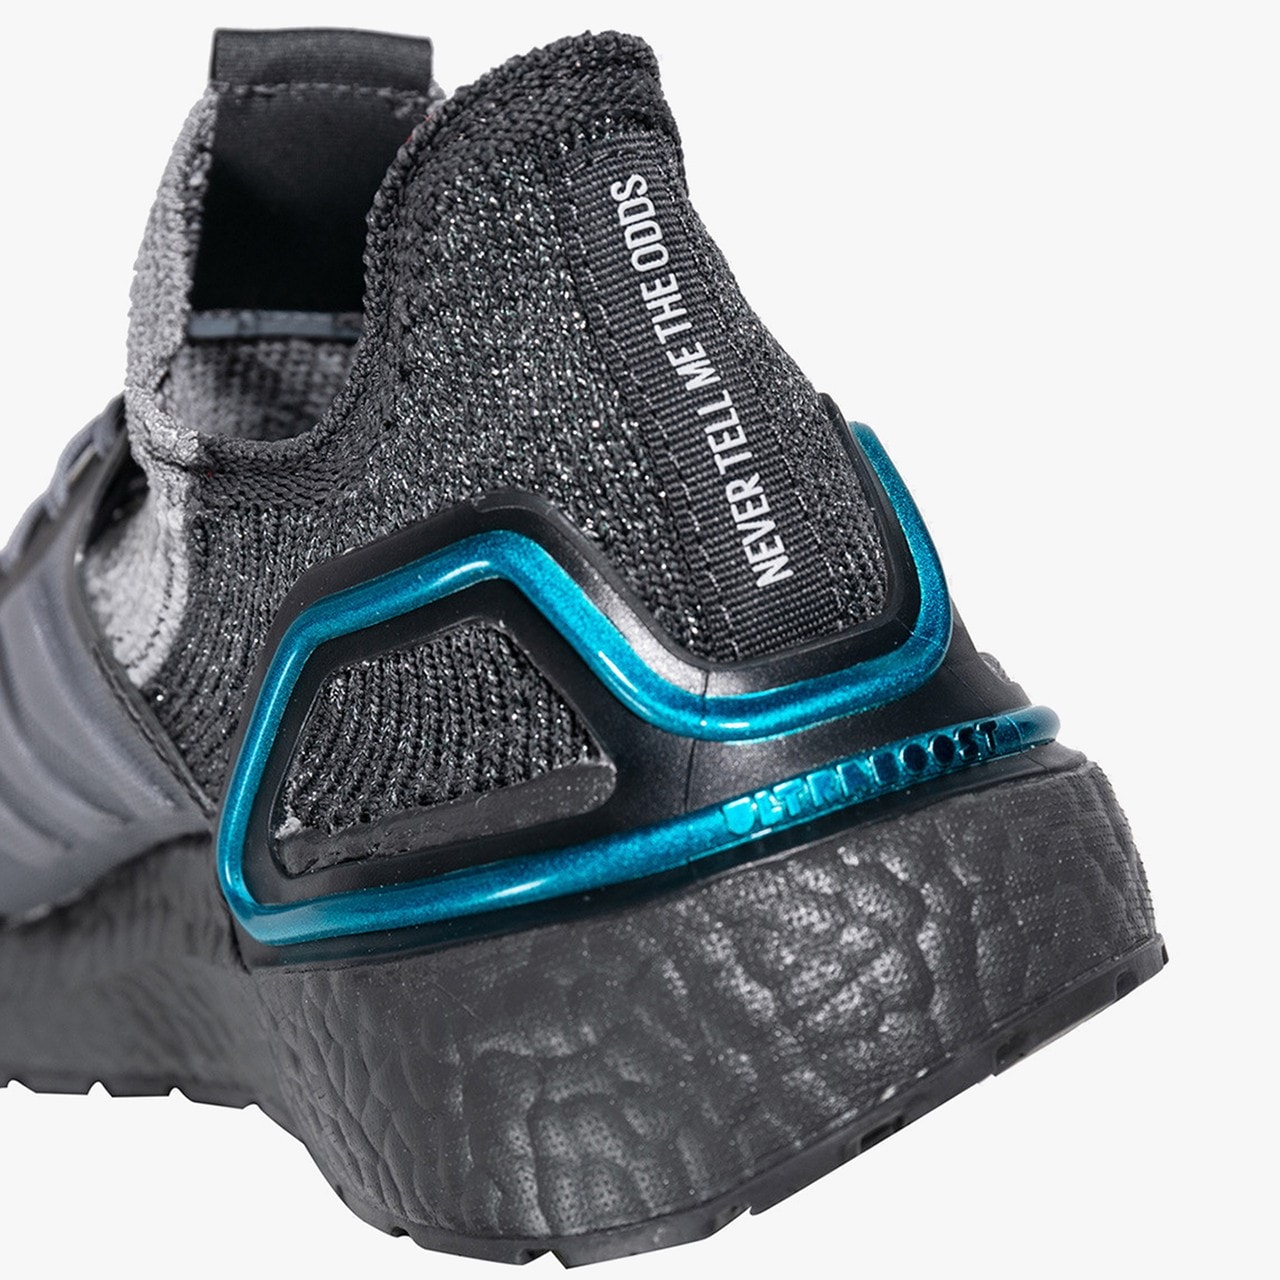 adidas x《Star Wars》X-Wing 戰鬥機聯乘 UltraBOOST 鞋款官方正式相片